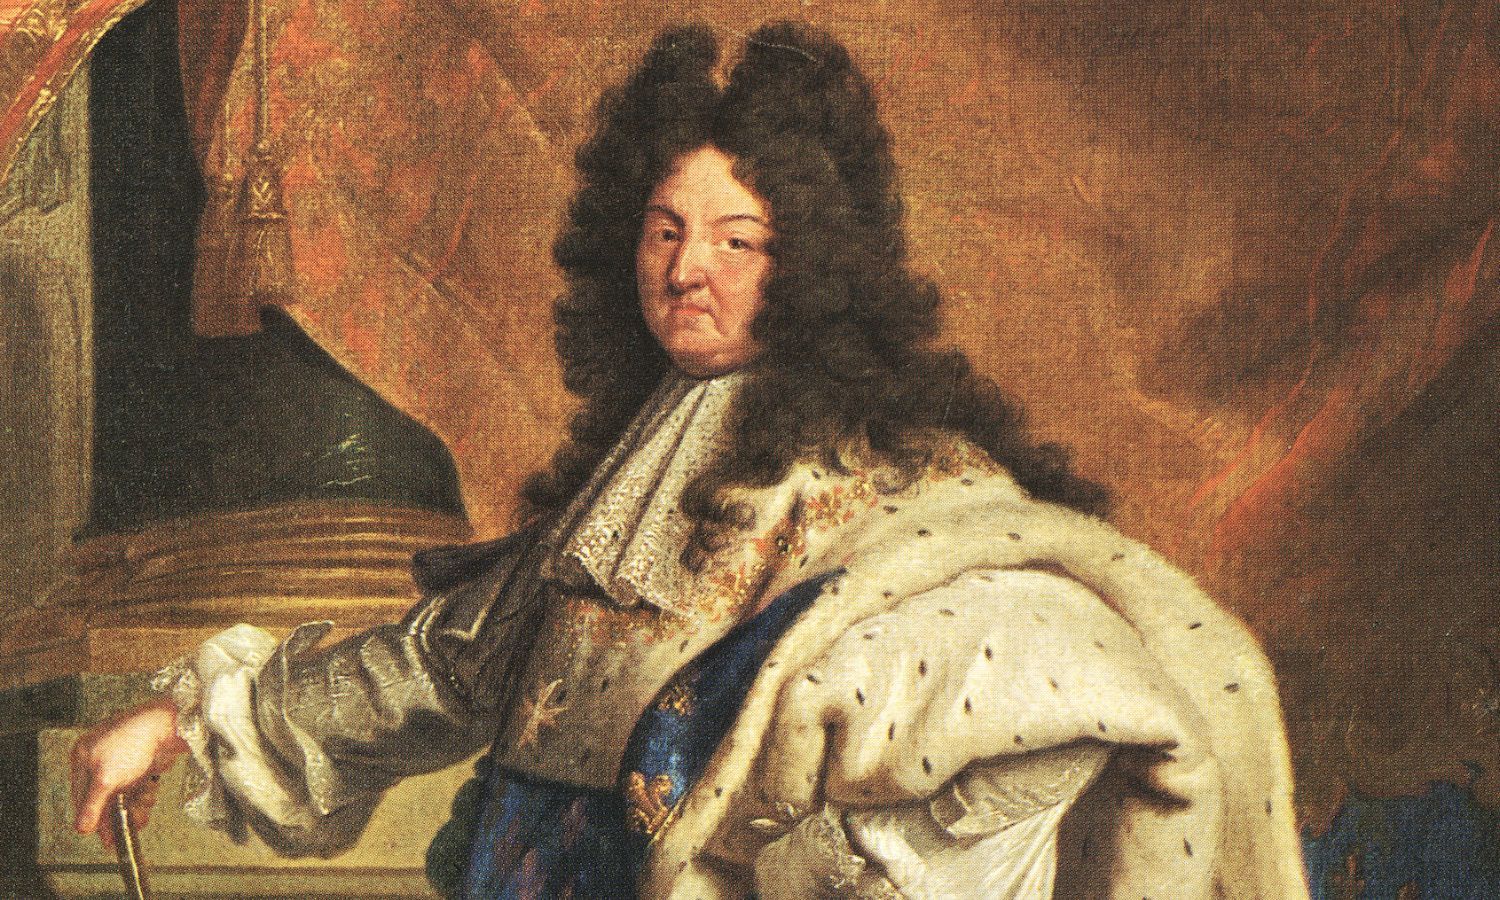 King Louis XIV longest reigning monarch